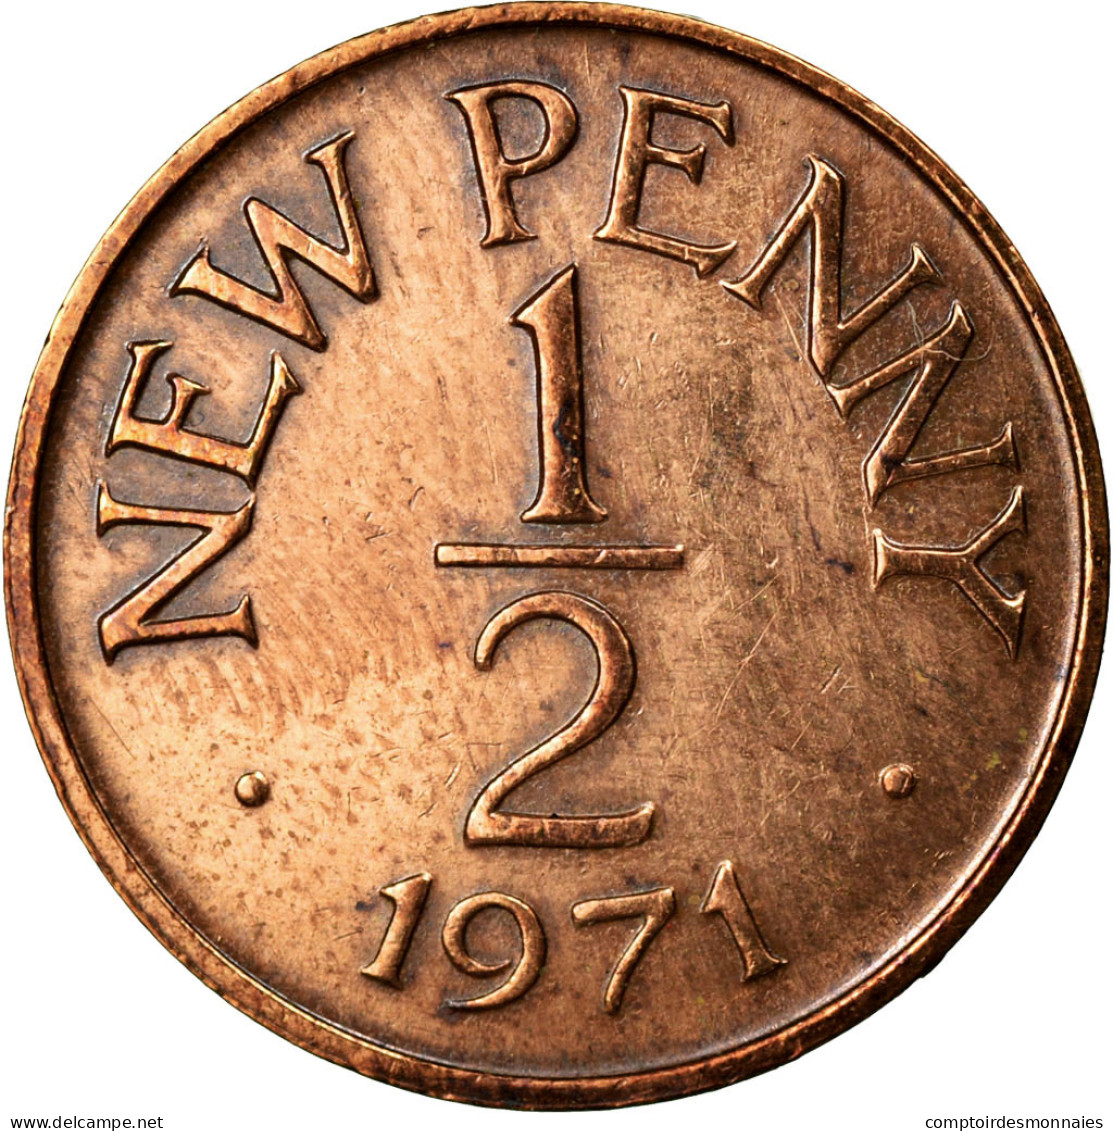 Monnaie, Guernsey, Elizabeth II, 1/2 New Penny, 1971, TTB+, Bronze, KM:20 - Guernesey